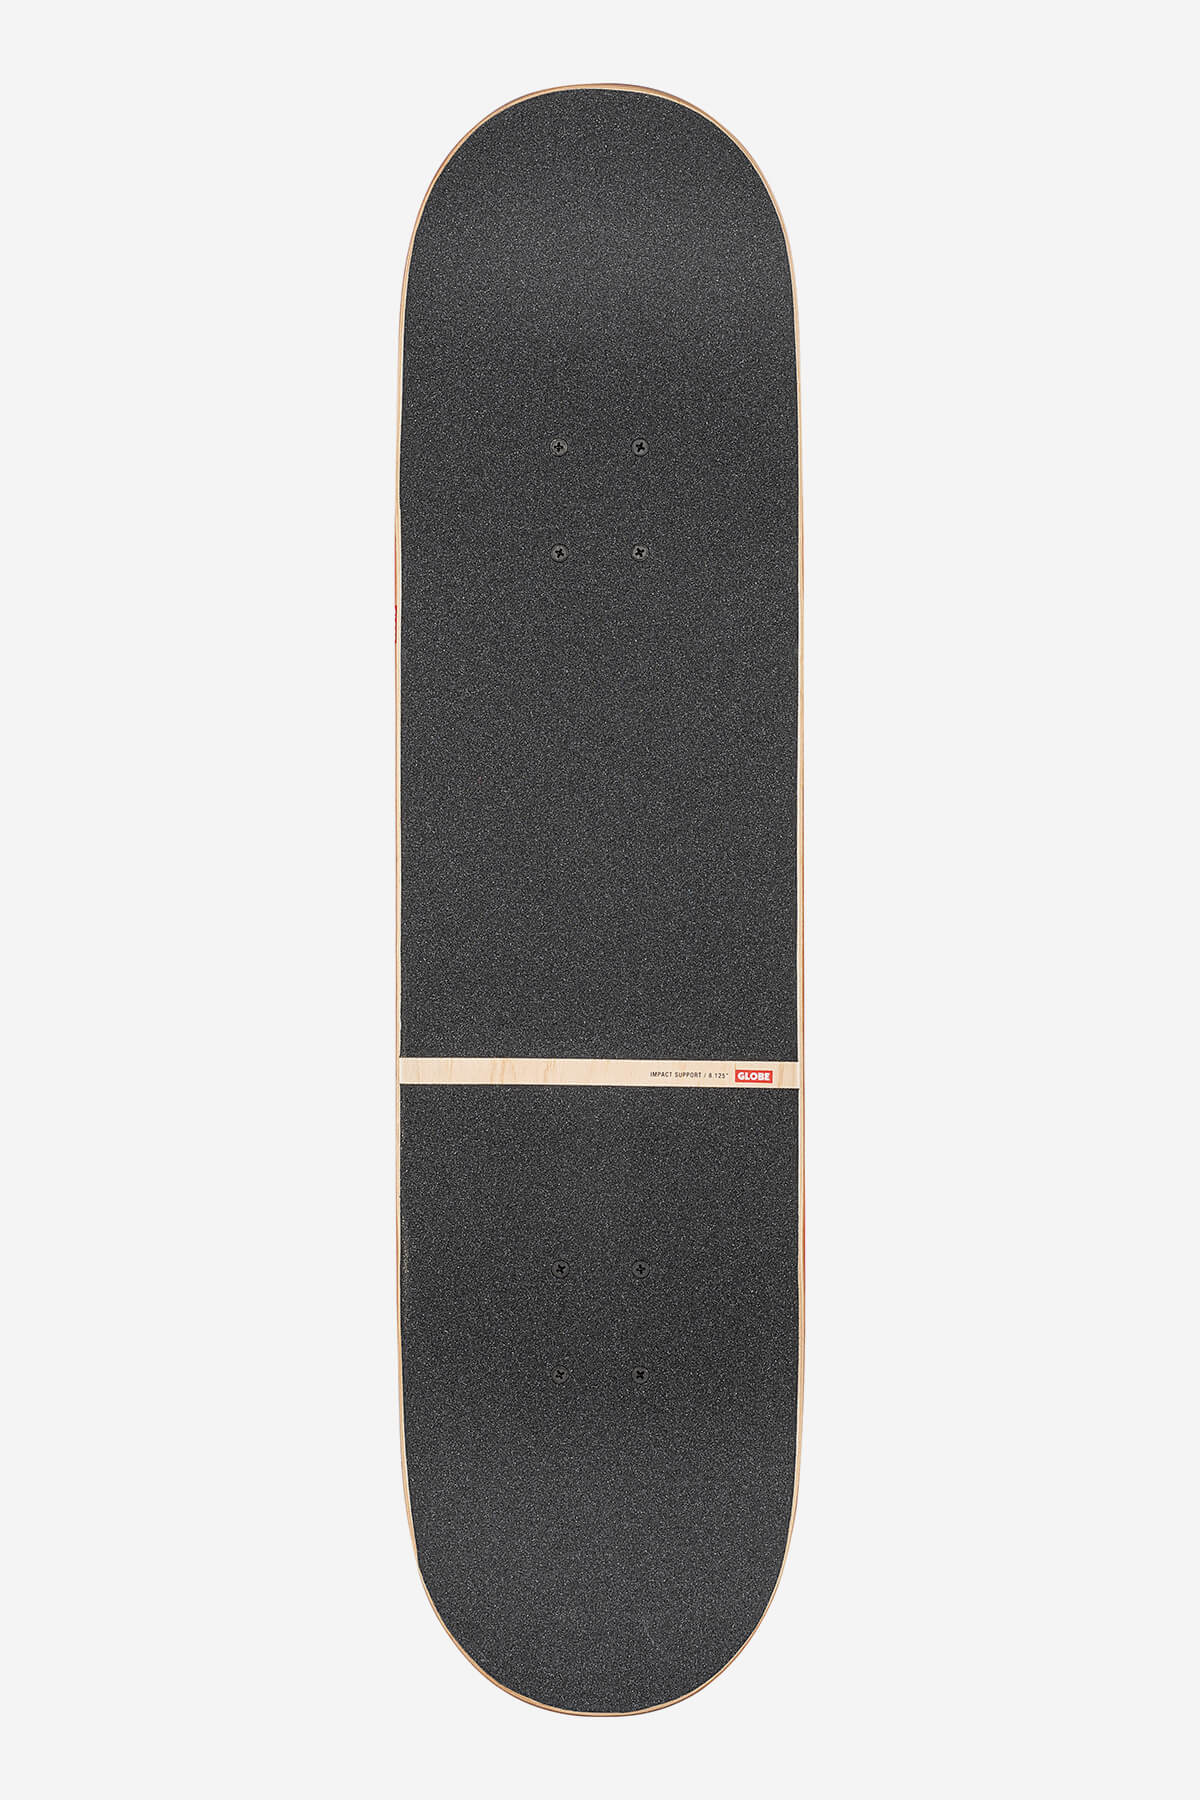 g3 bar impact nebula 8.125" compleet skateboard